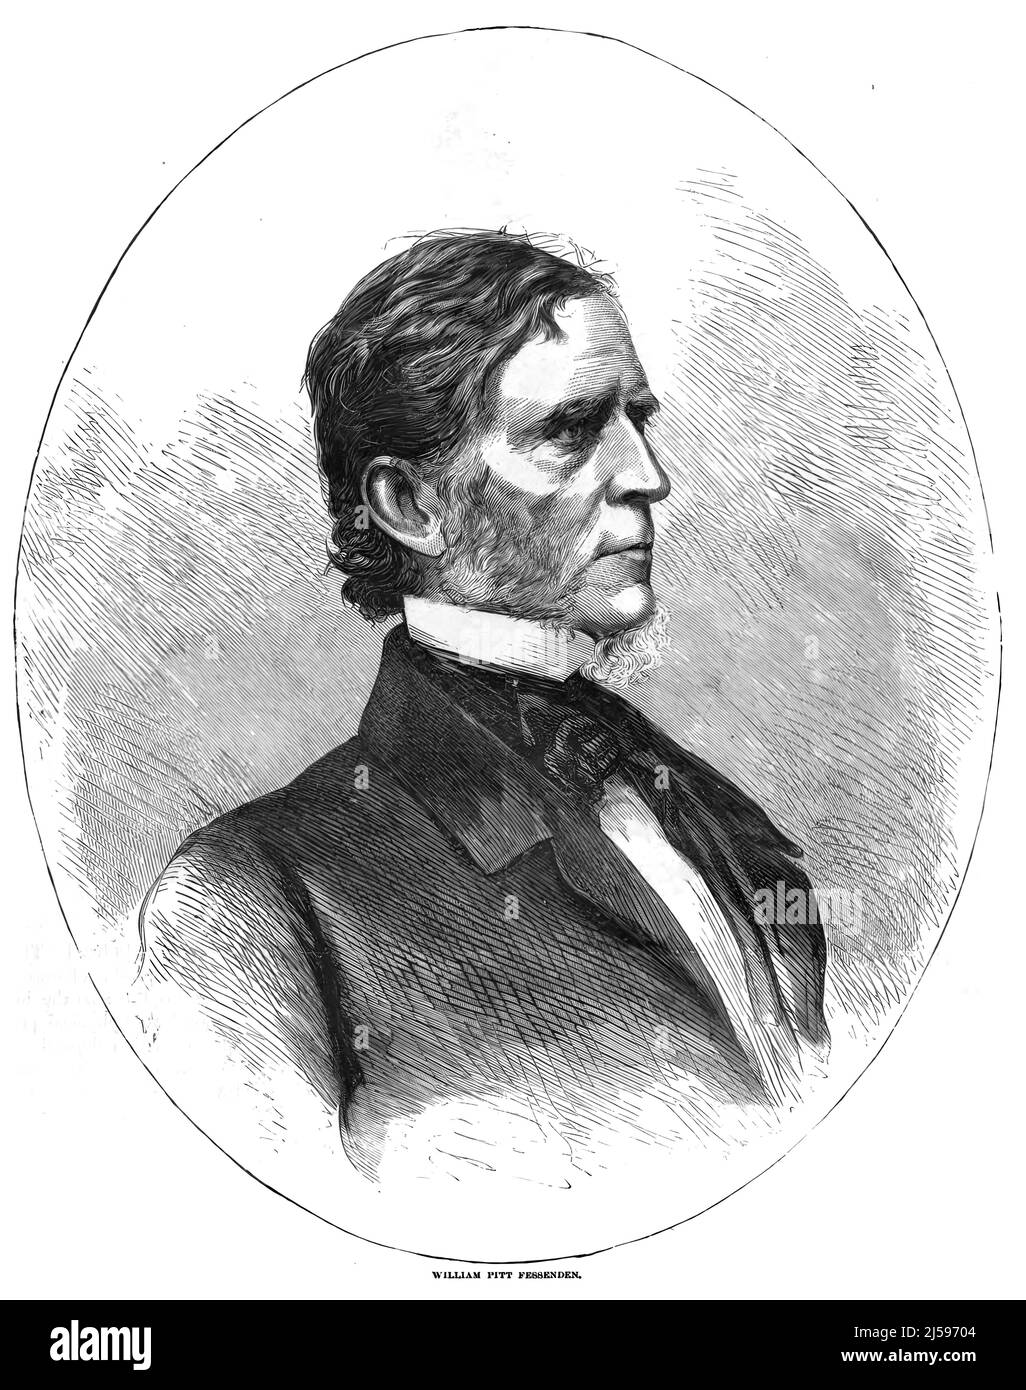 Portrait of William Pitt Fessenden, Secretary of the Treasury during the American Civil War. 19th century illustration Stock Photo